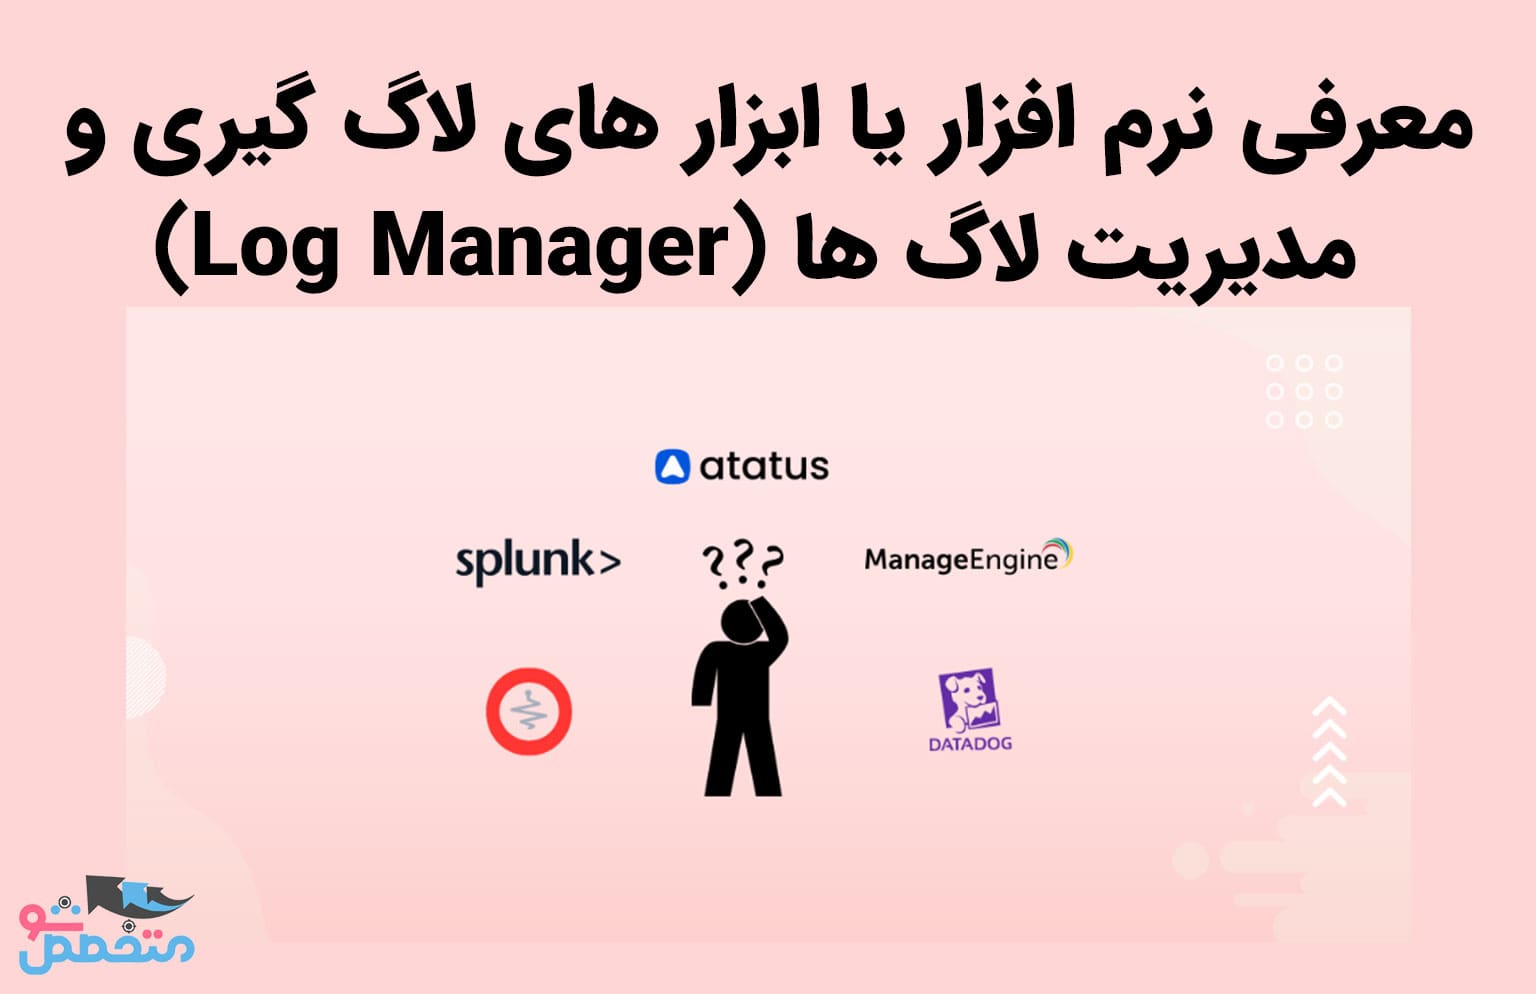 Log Manager